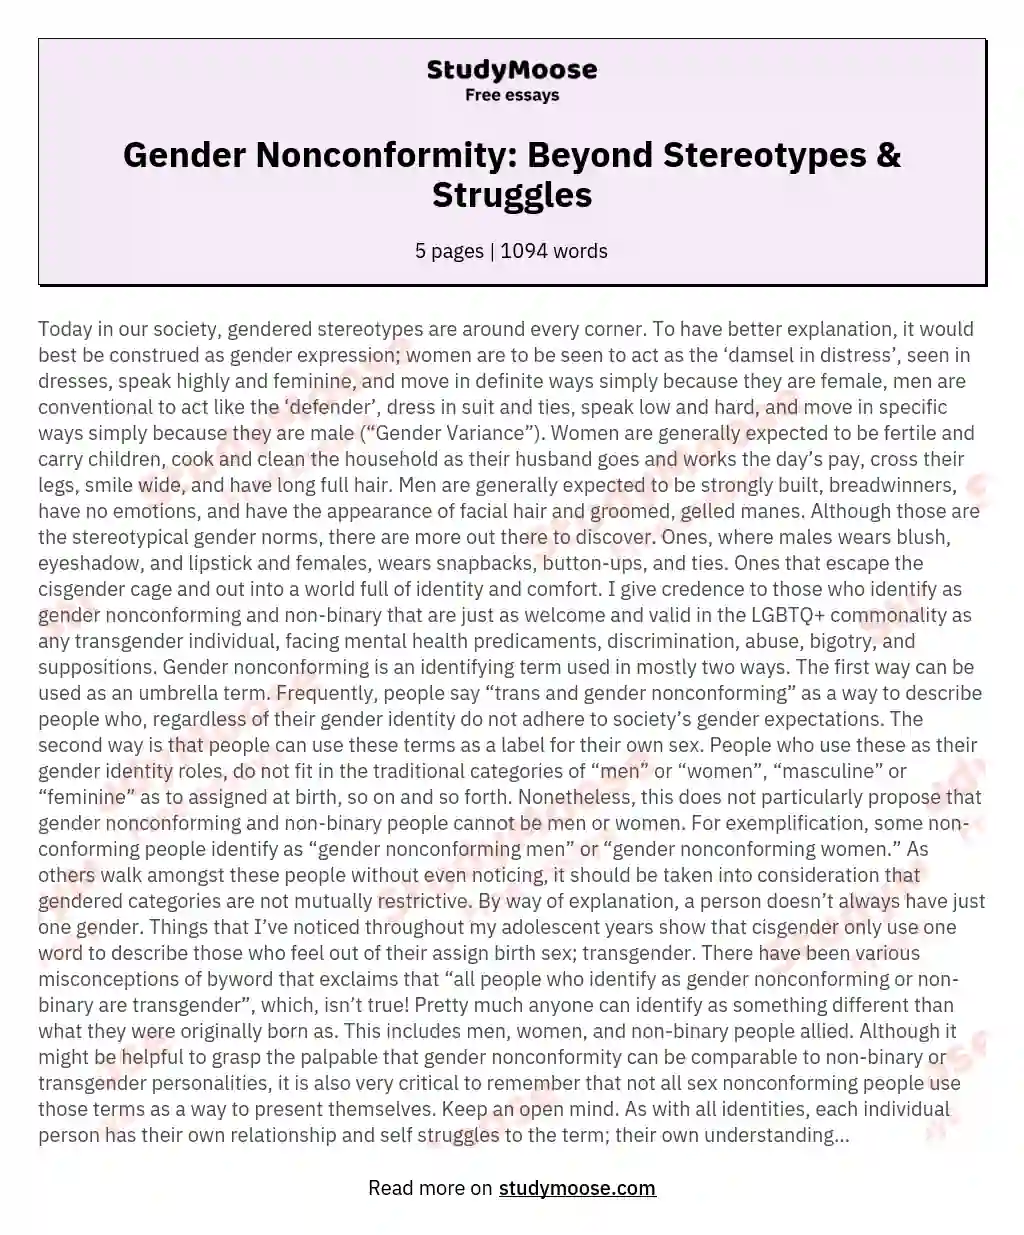 Gender Nonconformity: Beyond Stereotypes & Struggles essay